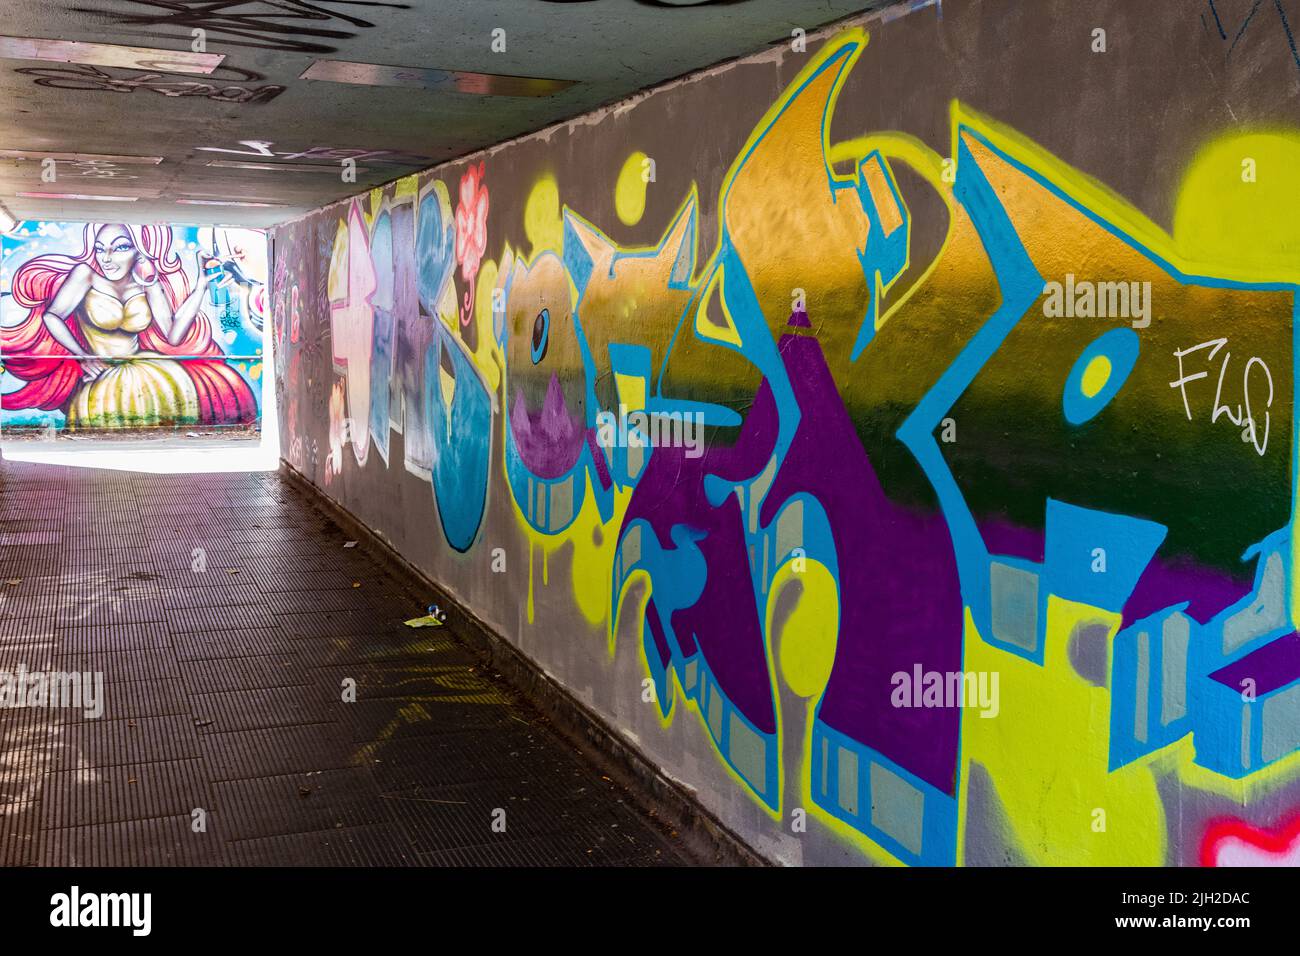 Colourful street art graffiti in a Cardiff underpass, subway. Stock Photo